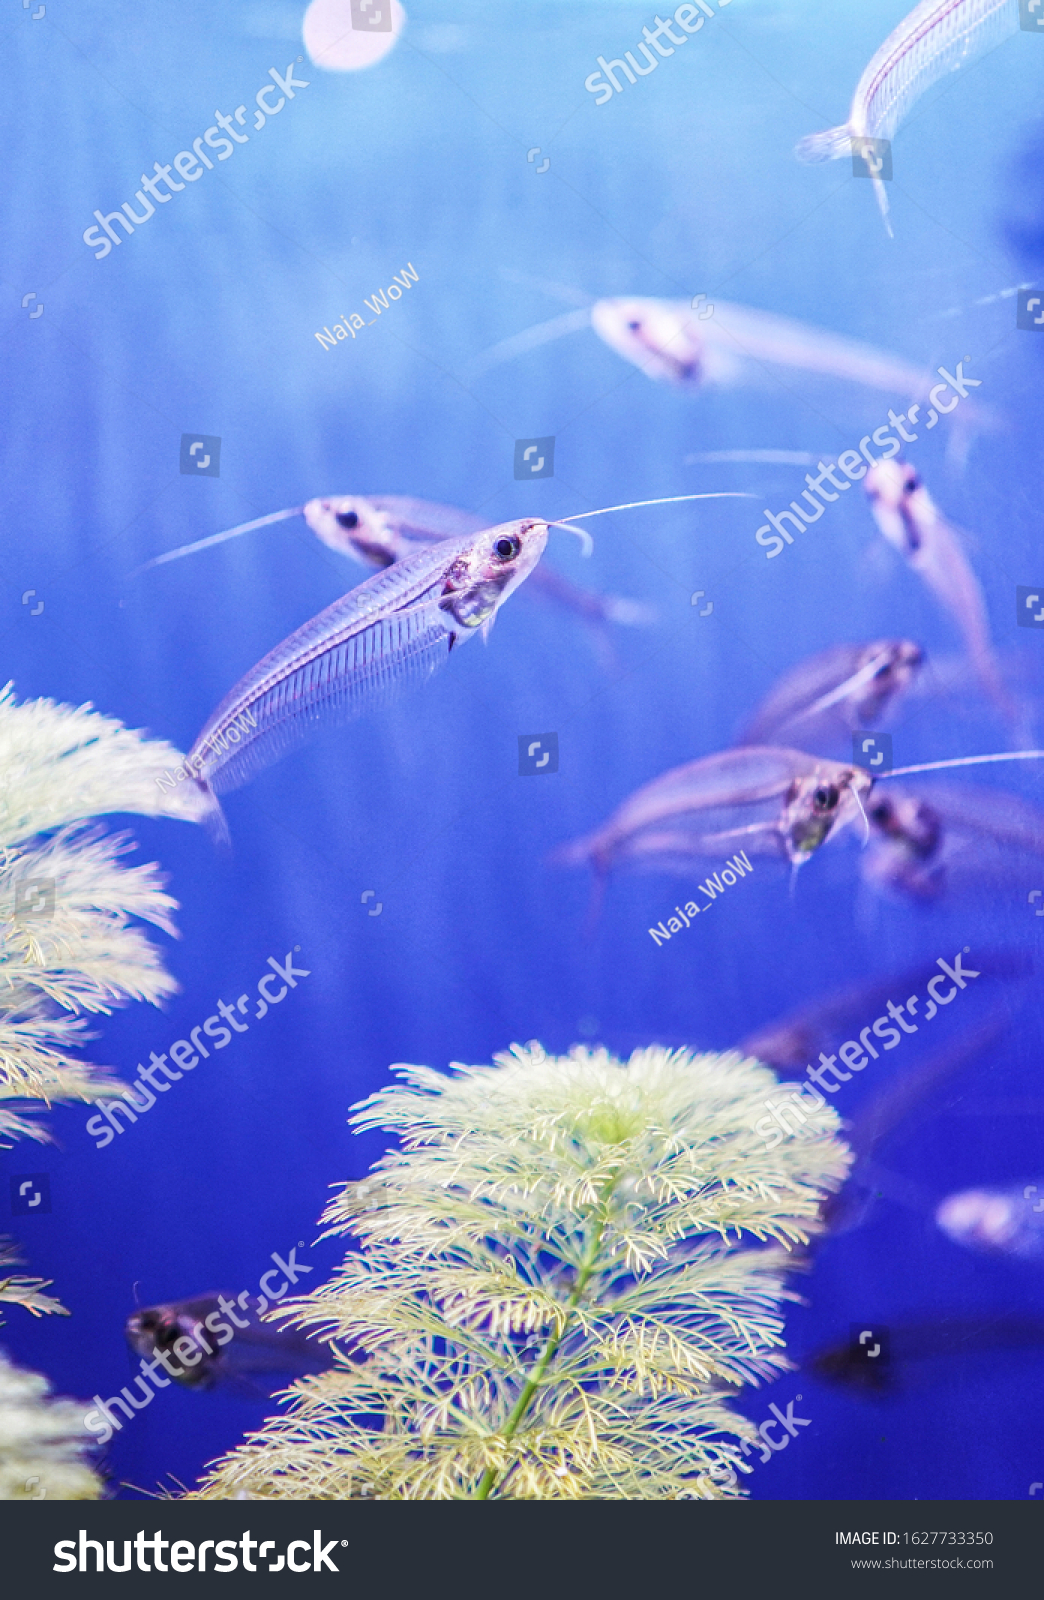 Aquarium transparent fish in blue water. Cute little fish in an aquarium. Under water photography of ocean fish. Glass catfish. #1627733350